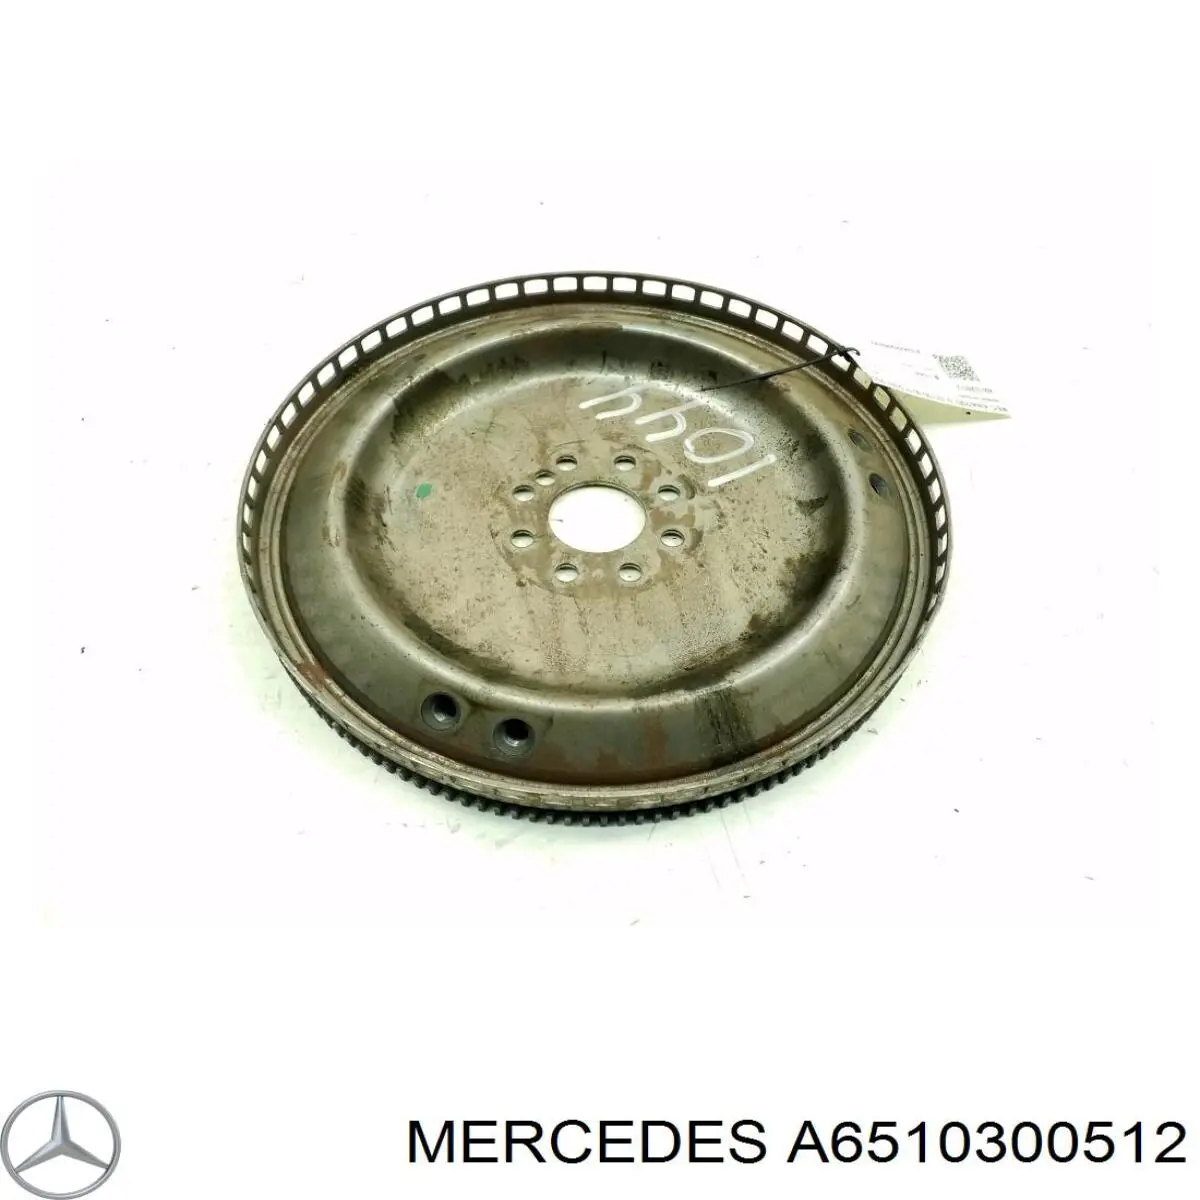 A6510300512 Mercedes 